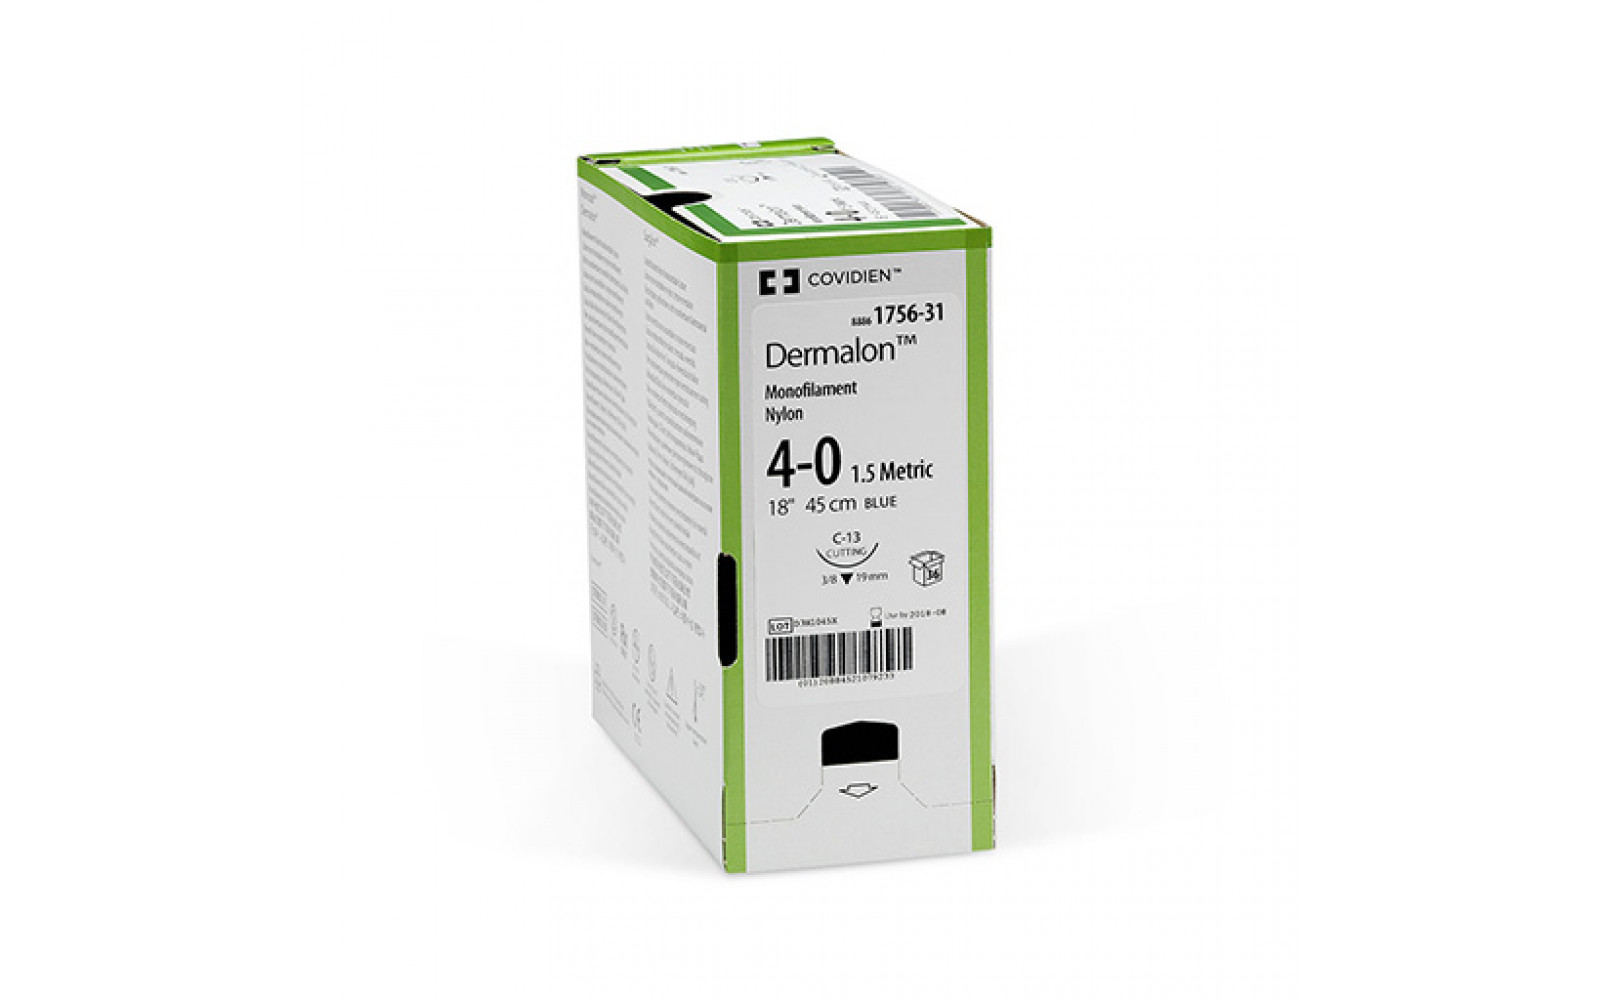 Dermalon™ Monofilament Nylon Sutures (Medtronic)